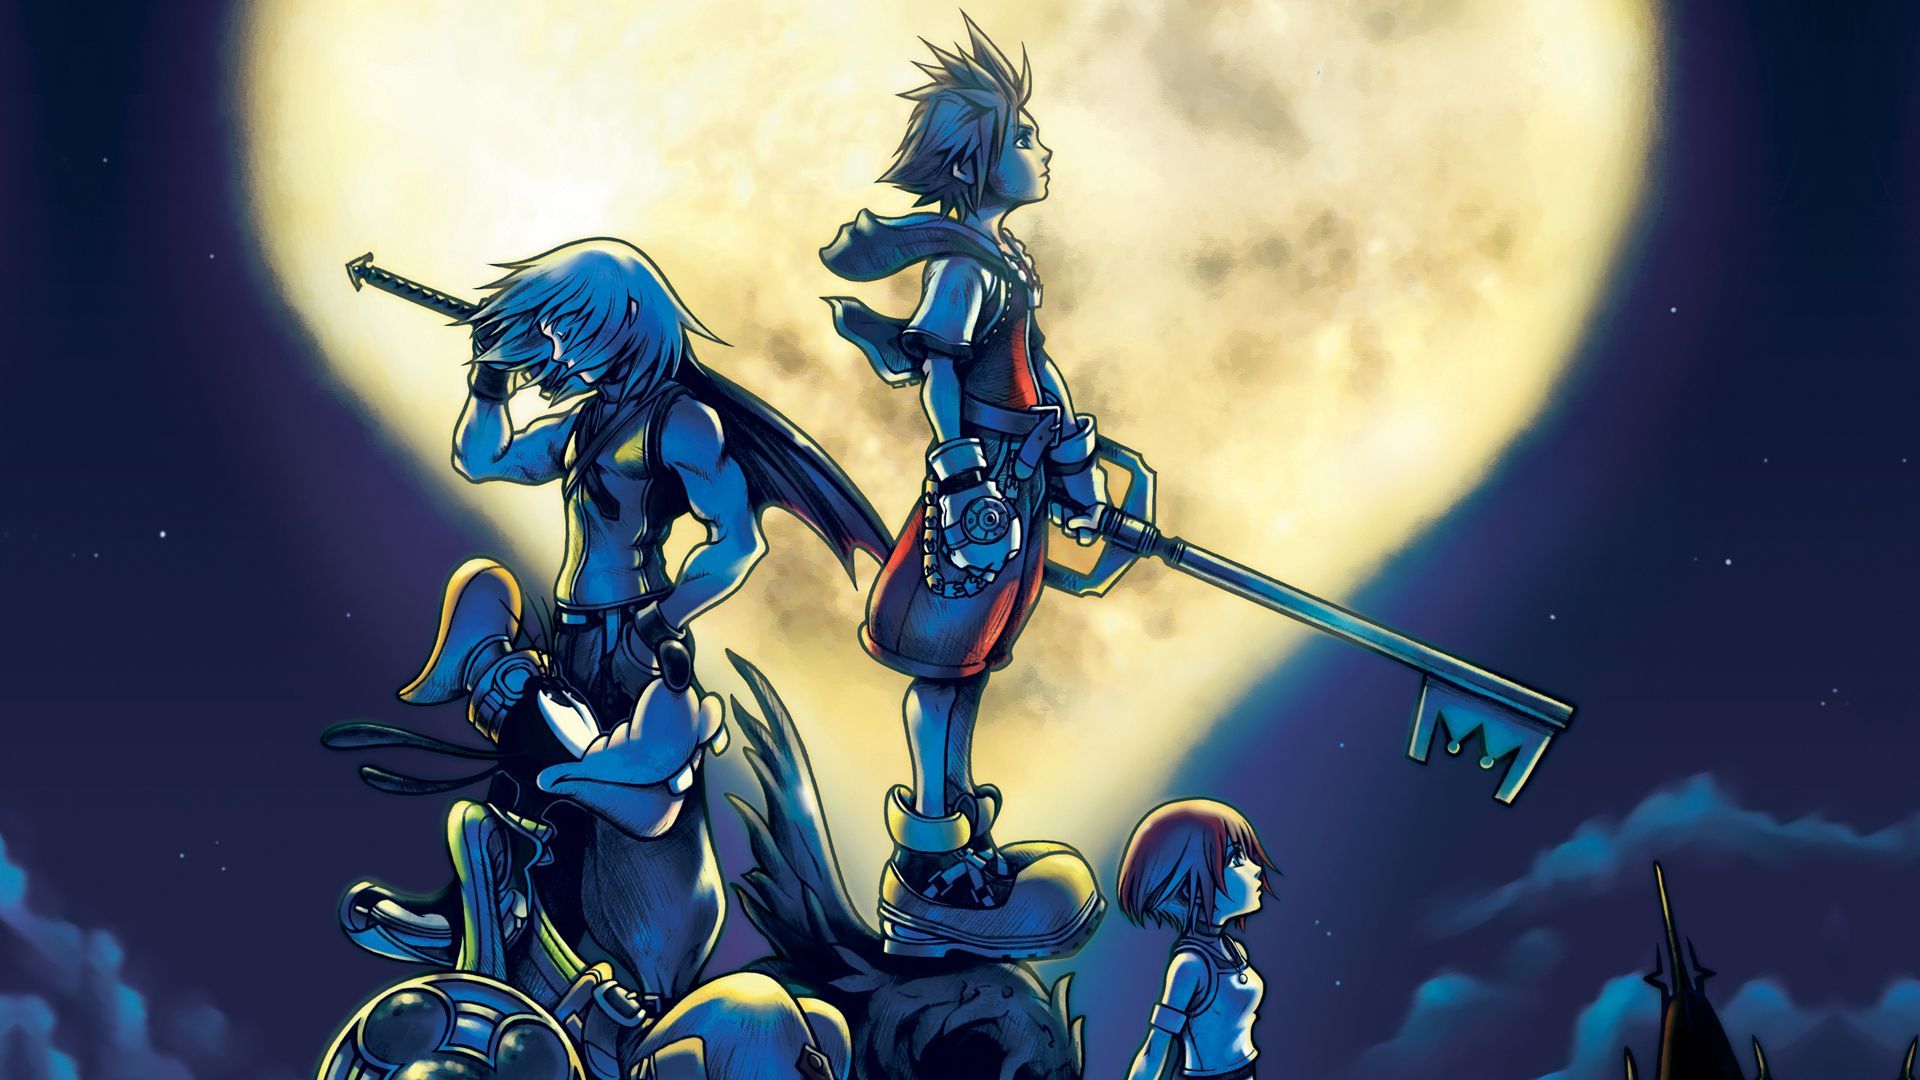 Kingdom Hearts wallpaper